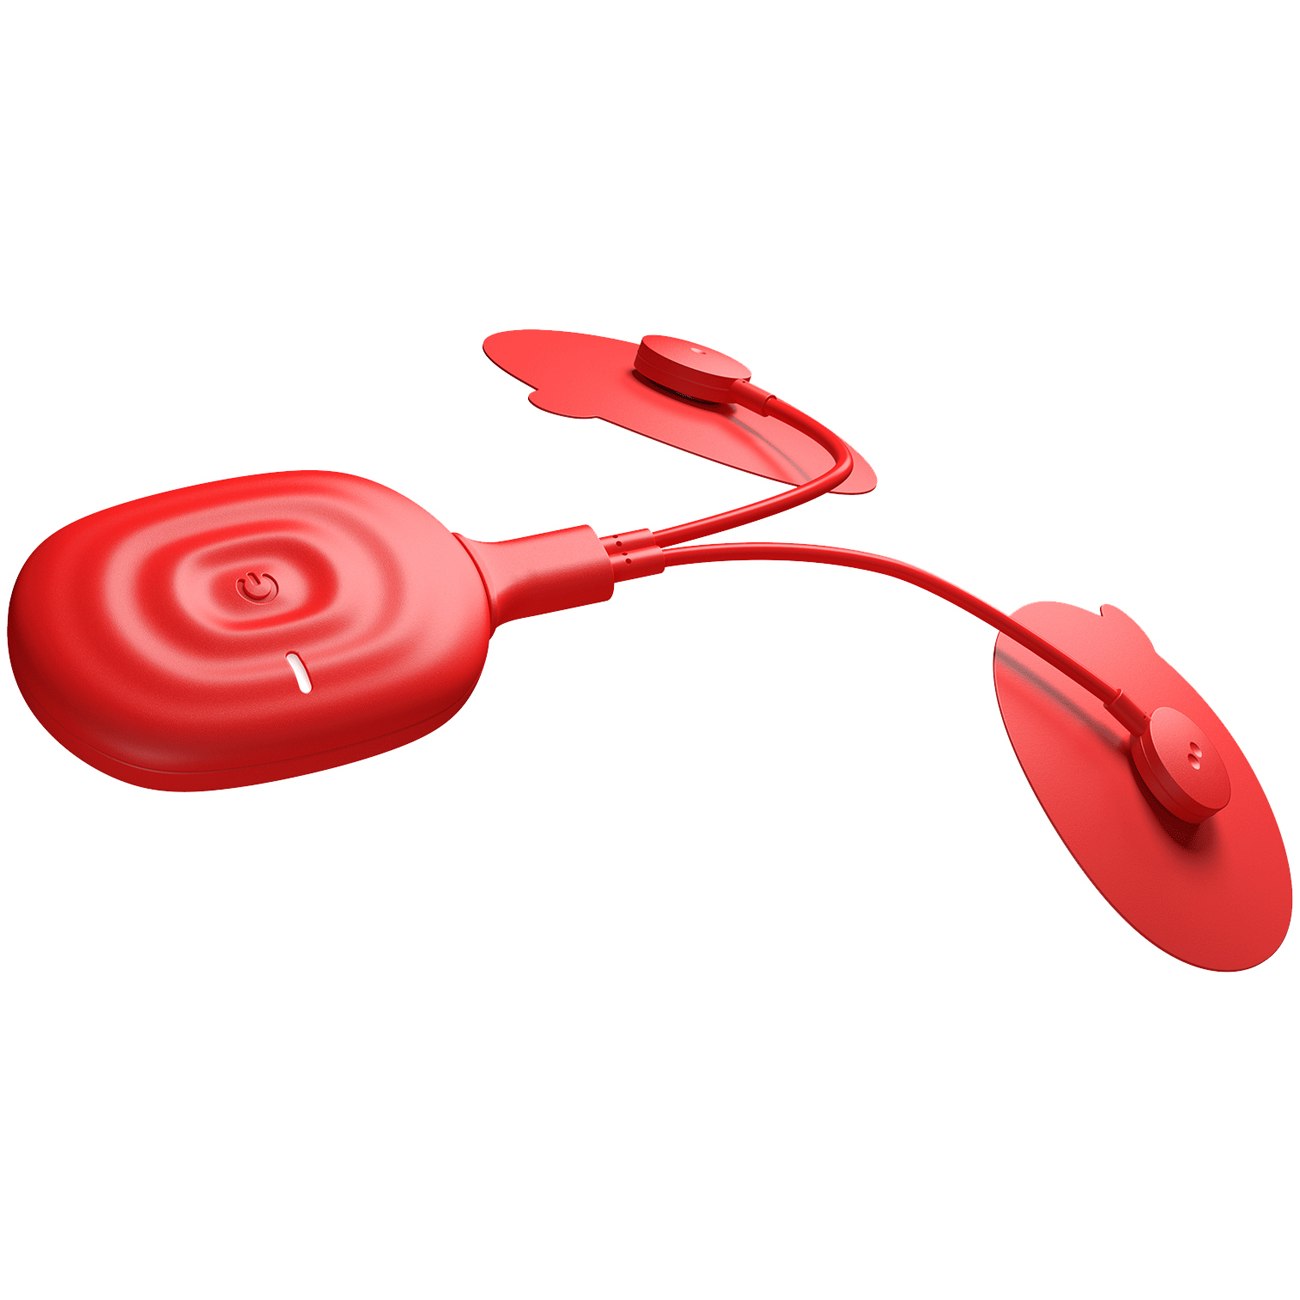 Productfoto van Powerdot Uno 2.0 Muscle Stimulation - red